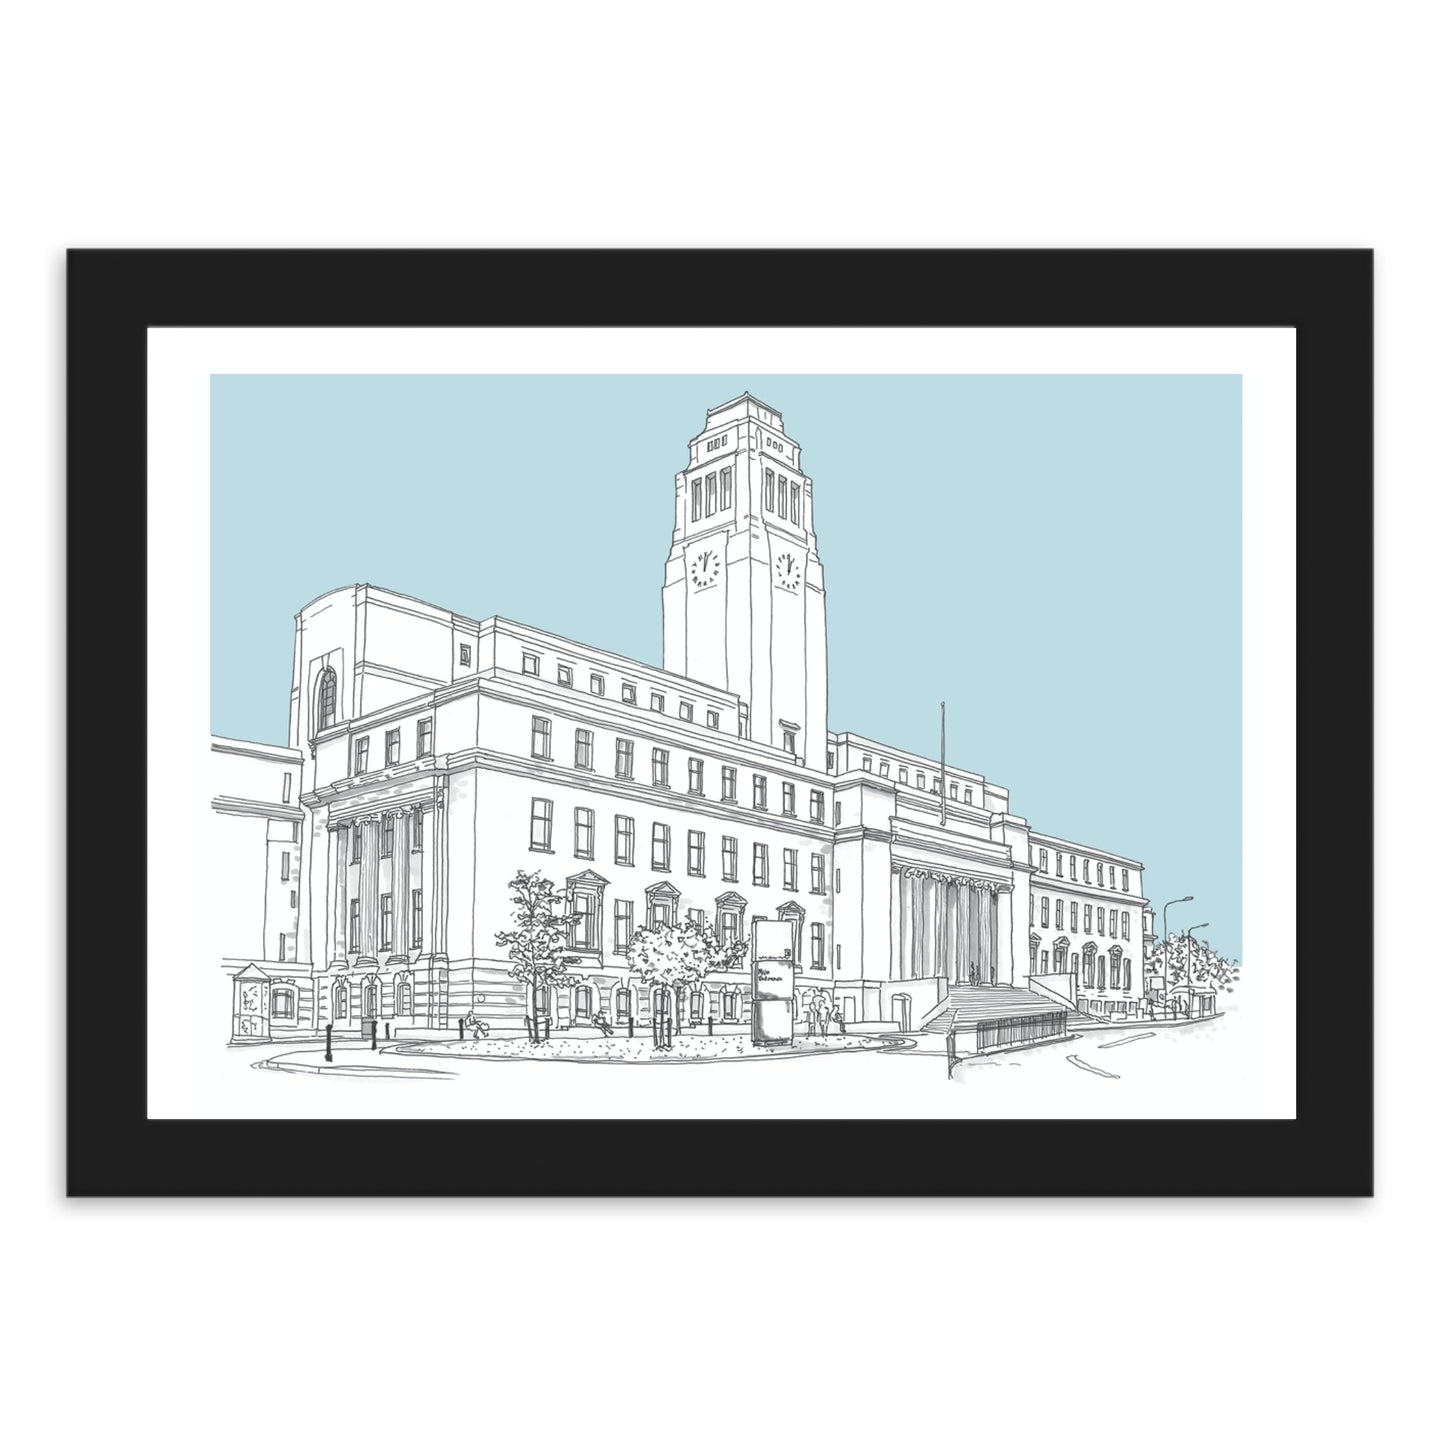 Parkinson Building, University of Leeds Print - The Great Yorkshire Shop